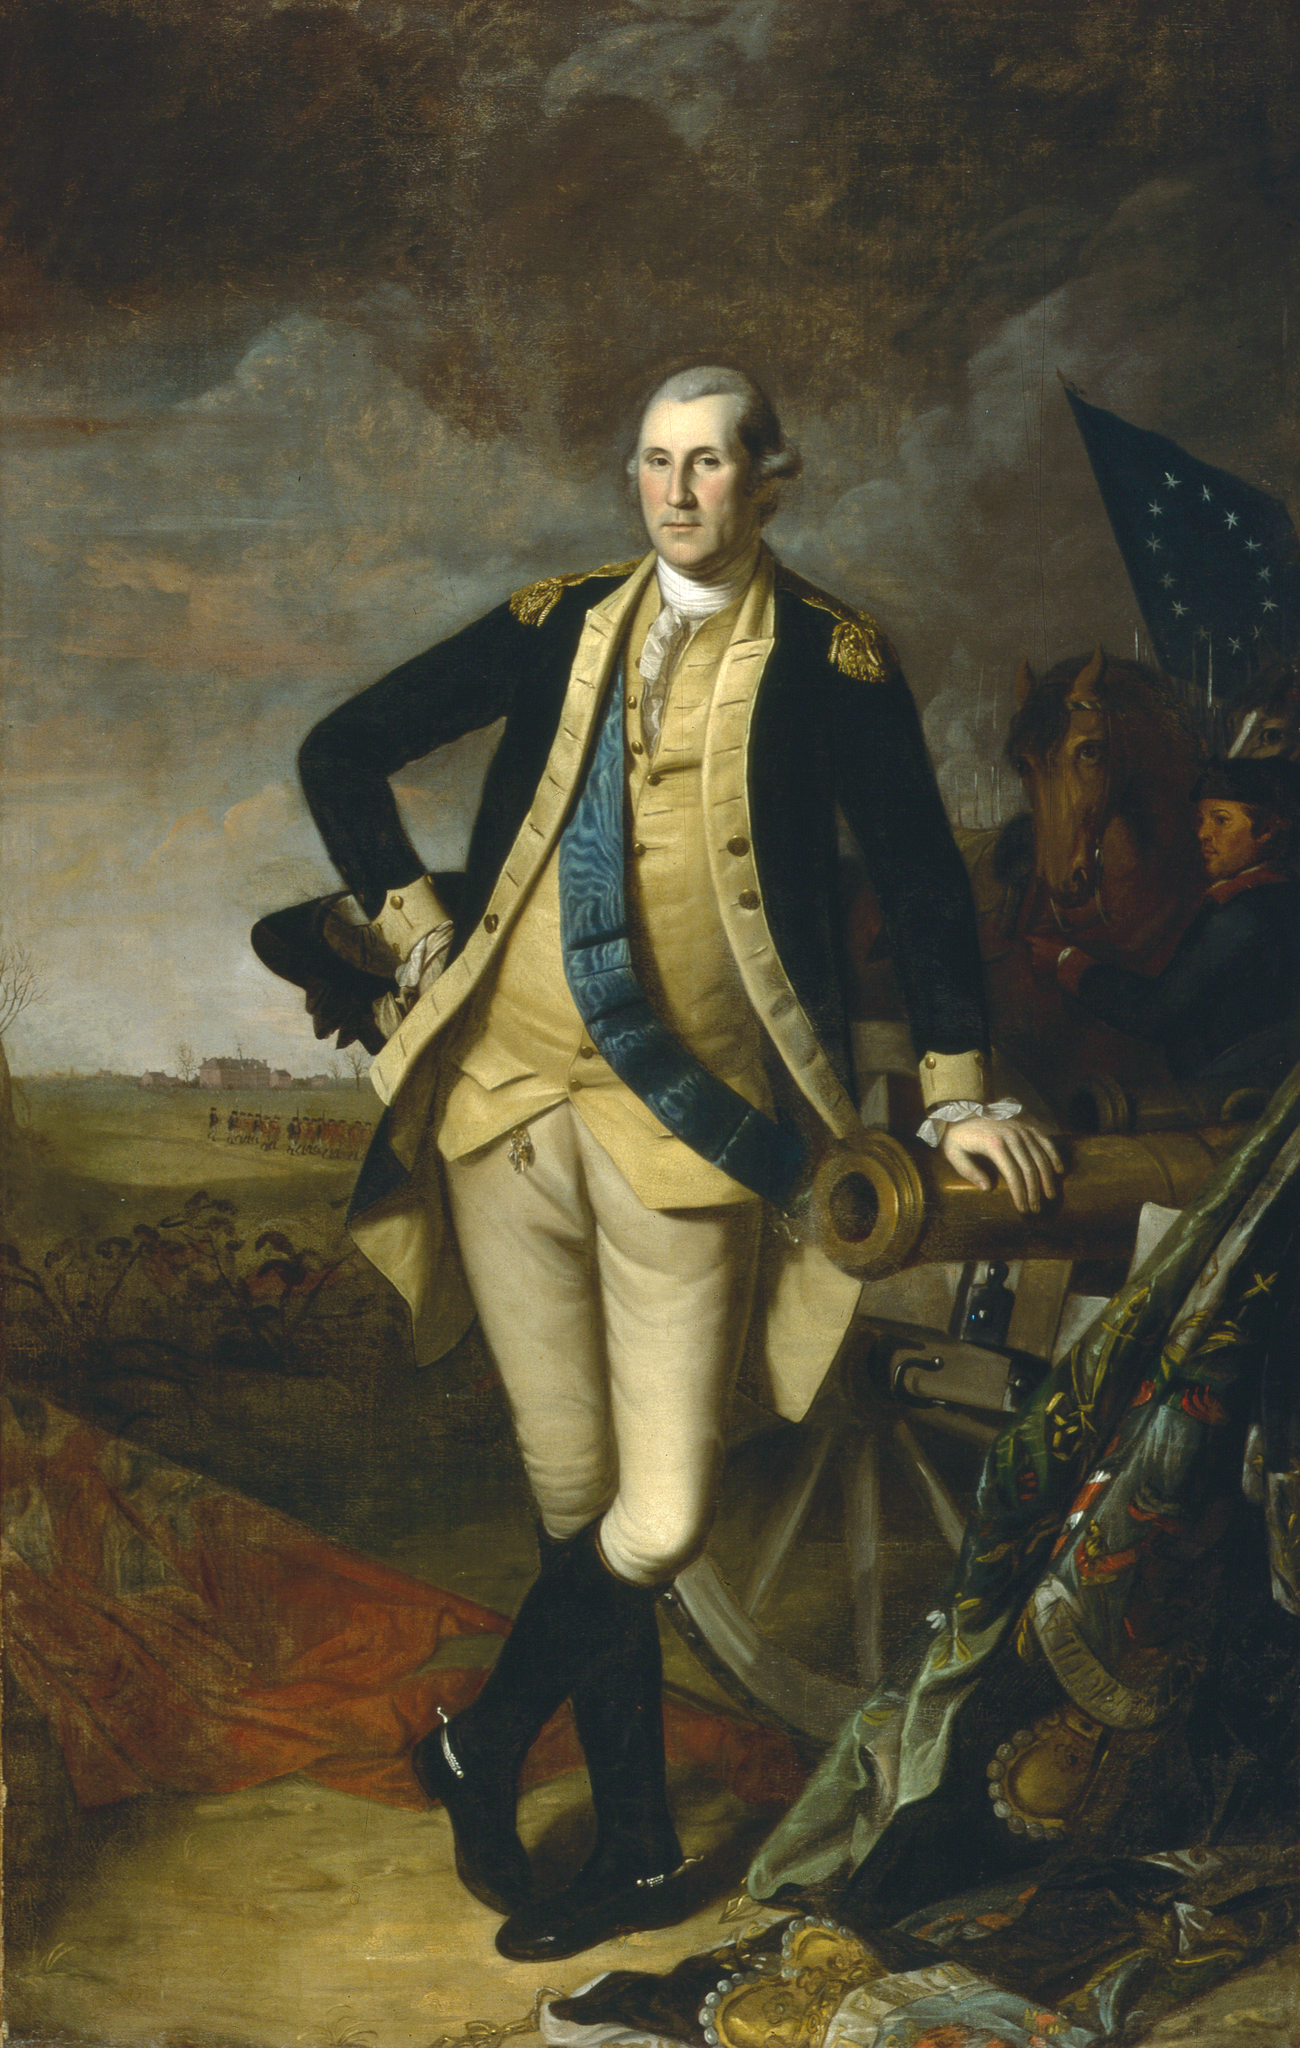 George Washington at Princeton by Charles Willson Peale, 1779